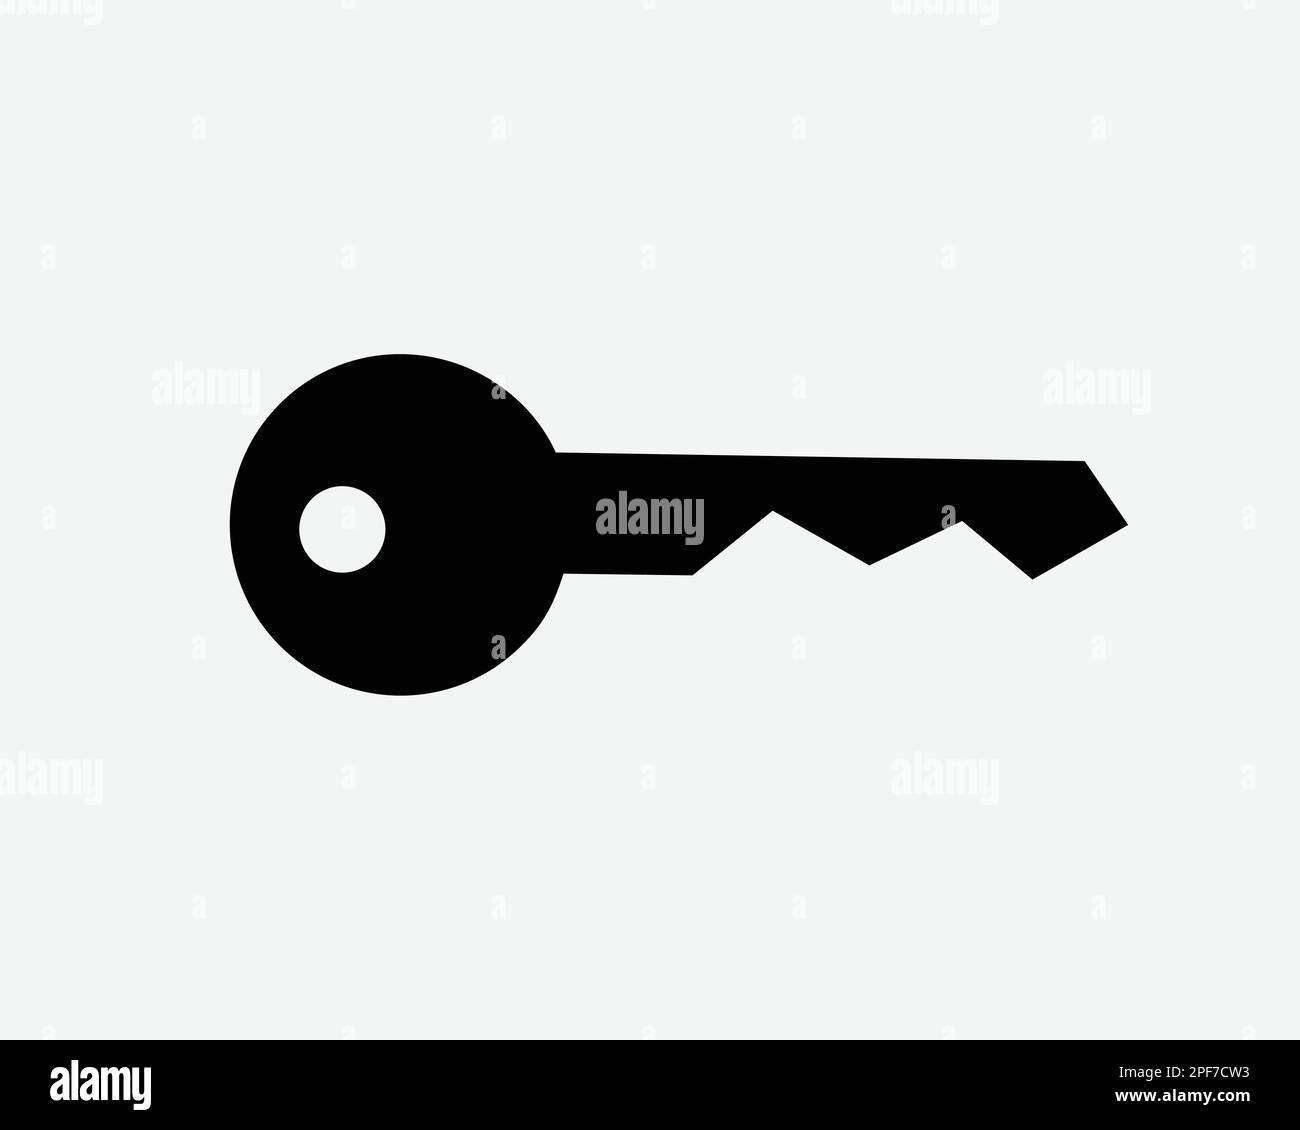 Key Icon House Door Home Keys Lock Safe Password Secret Access Black White Silhouette Symbol Sign Graphic Clipart Artwork Illustration Pictogram Vecto Stock Vector